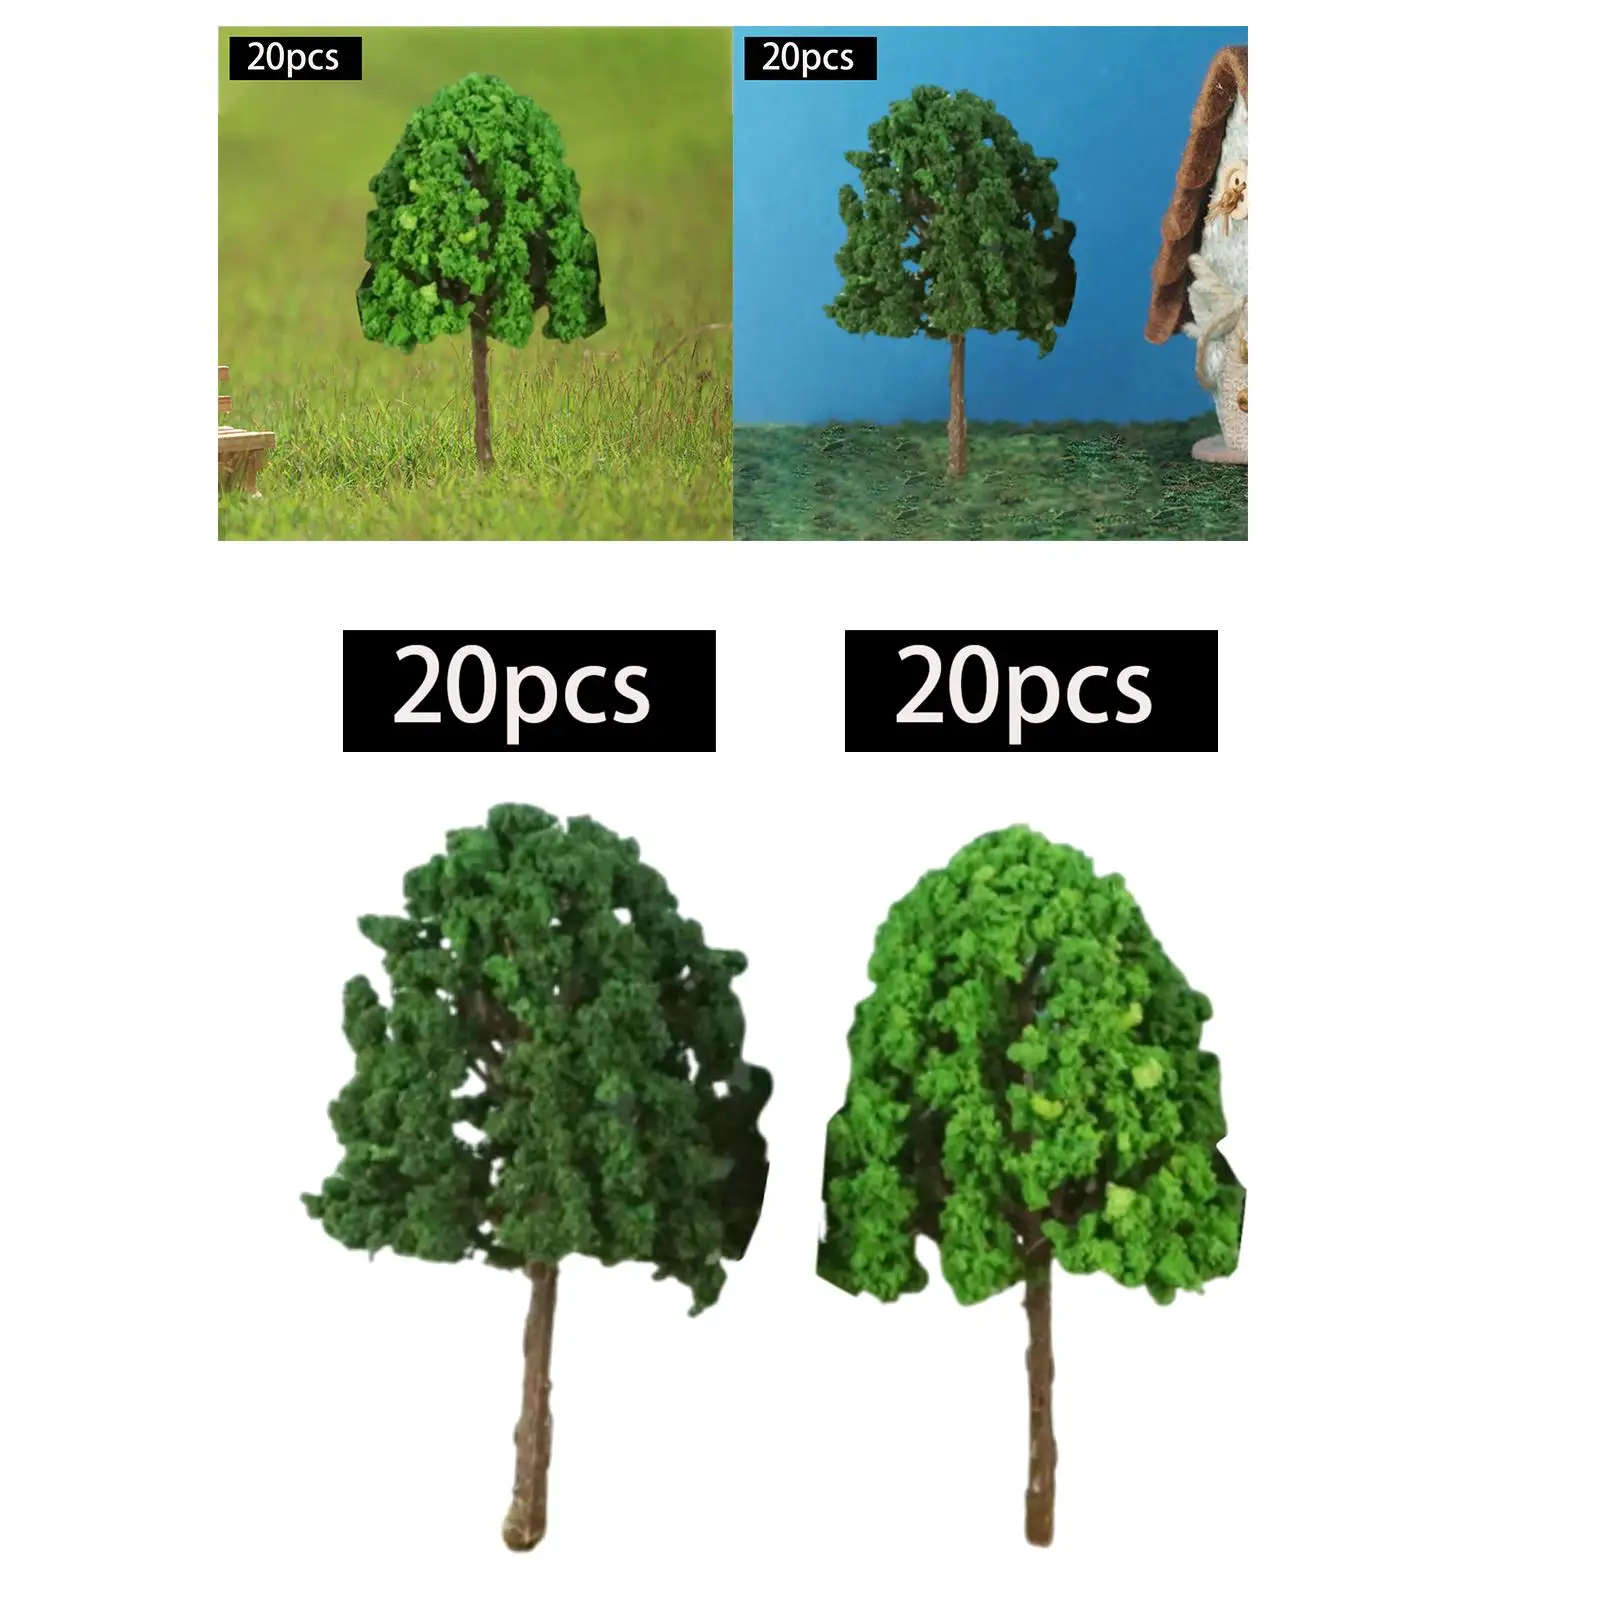 20Pcs Model Trees Miniature Trees Train Scenery Architecture Trees Diorama Supplies for Railway